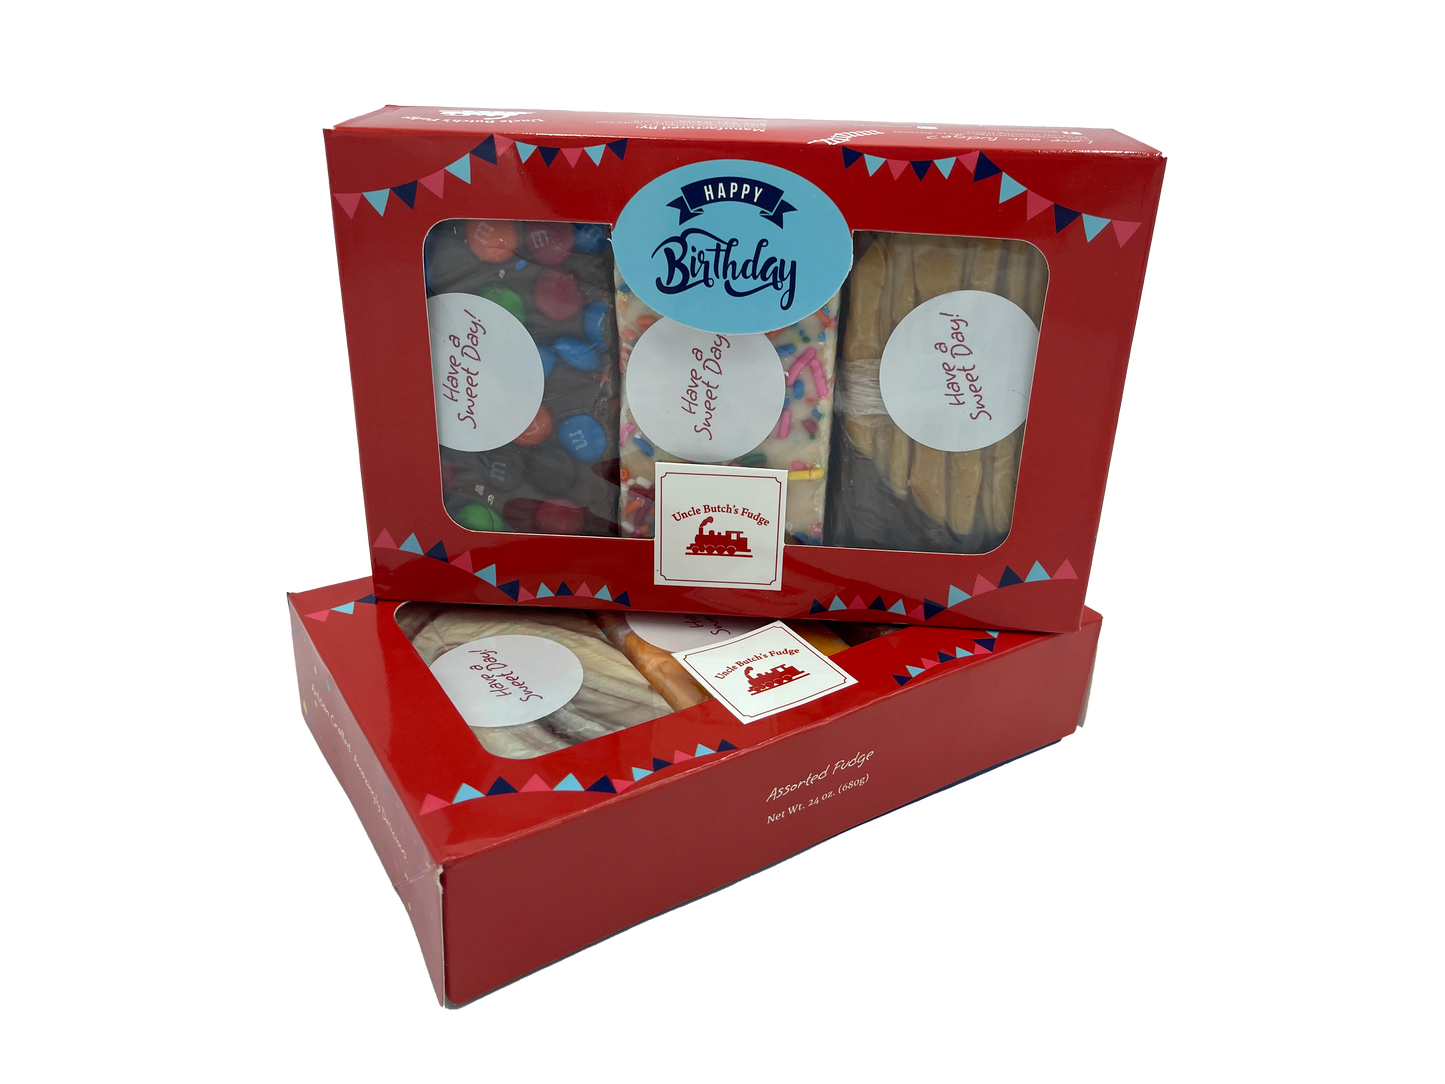 Fudge Gift Variety Box (3 piece - 24 oz)